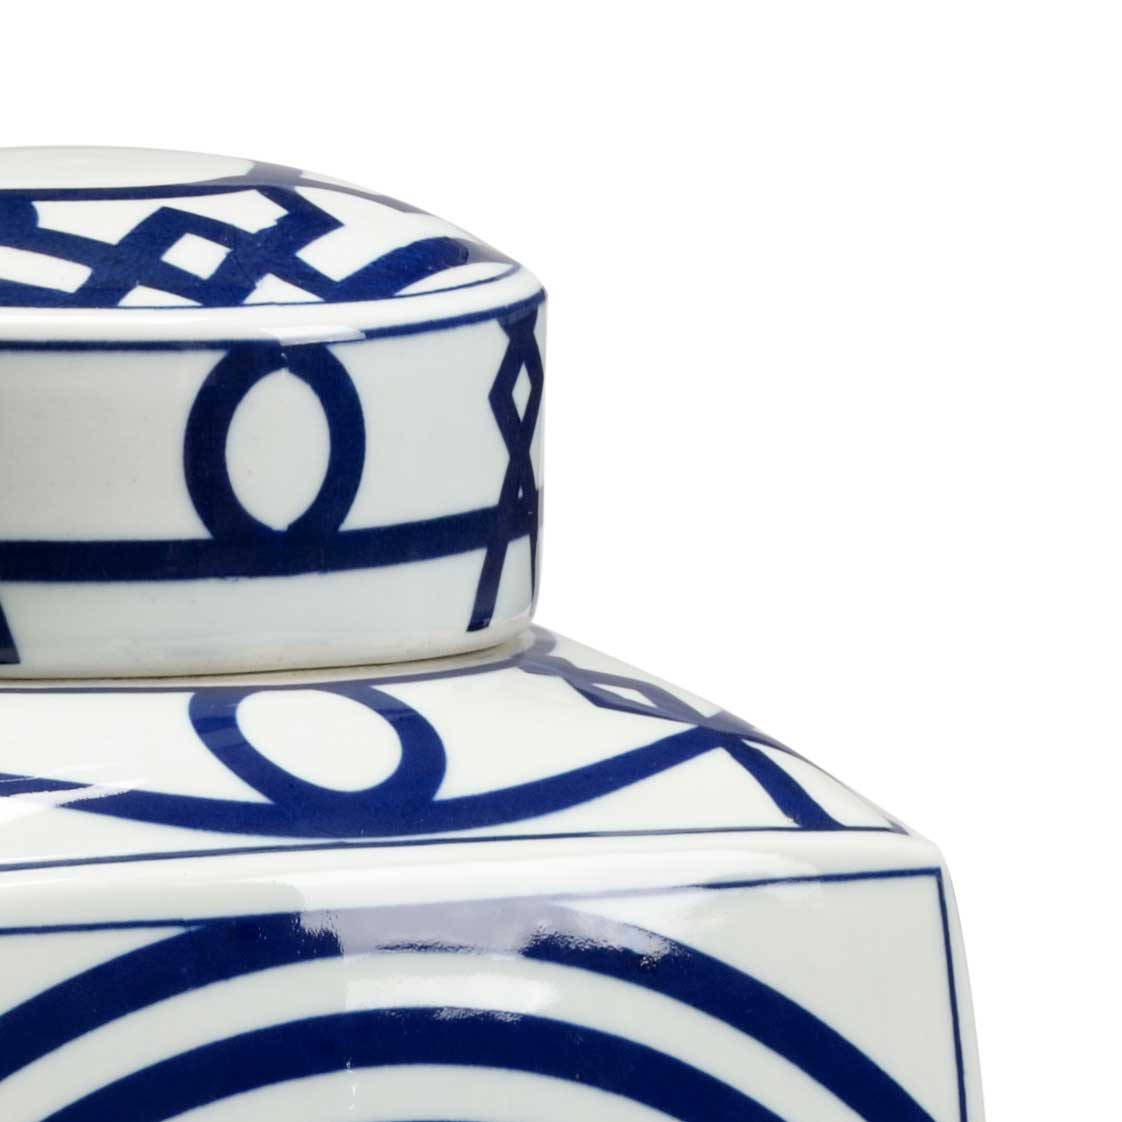 Hobbs Blue Vase Ceramic Blue and White Geometric Design Home Decor Main Image